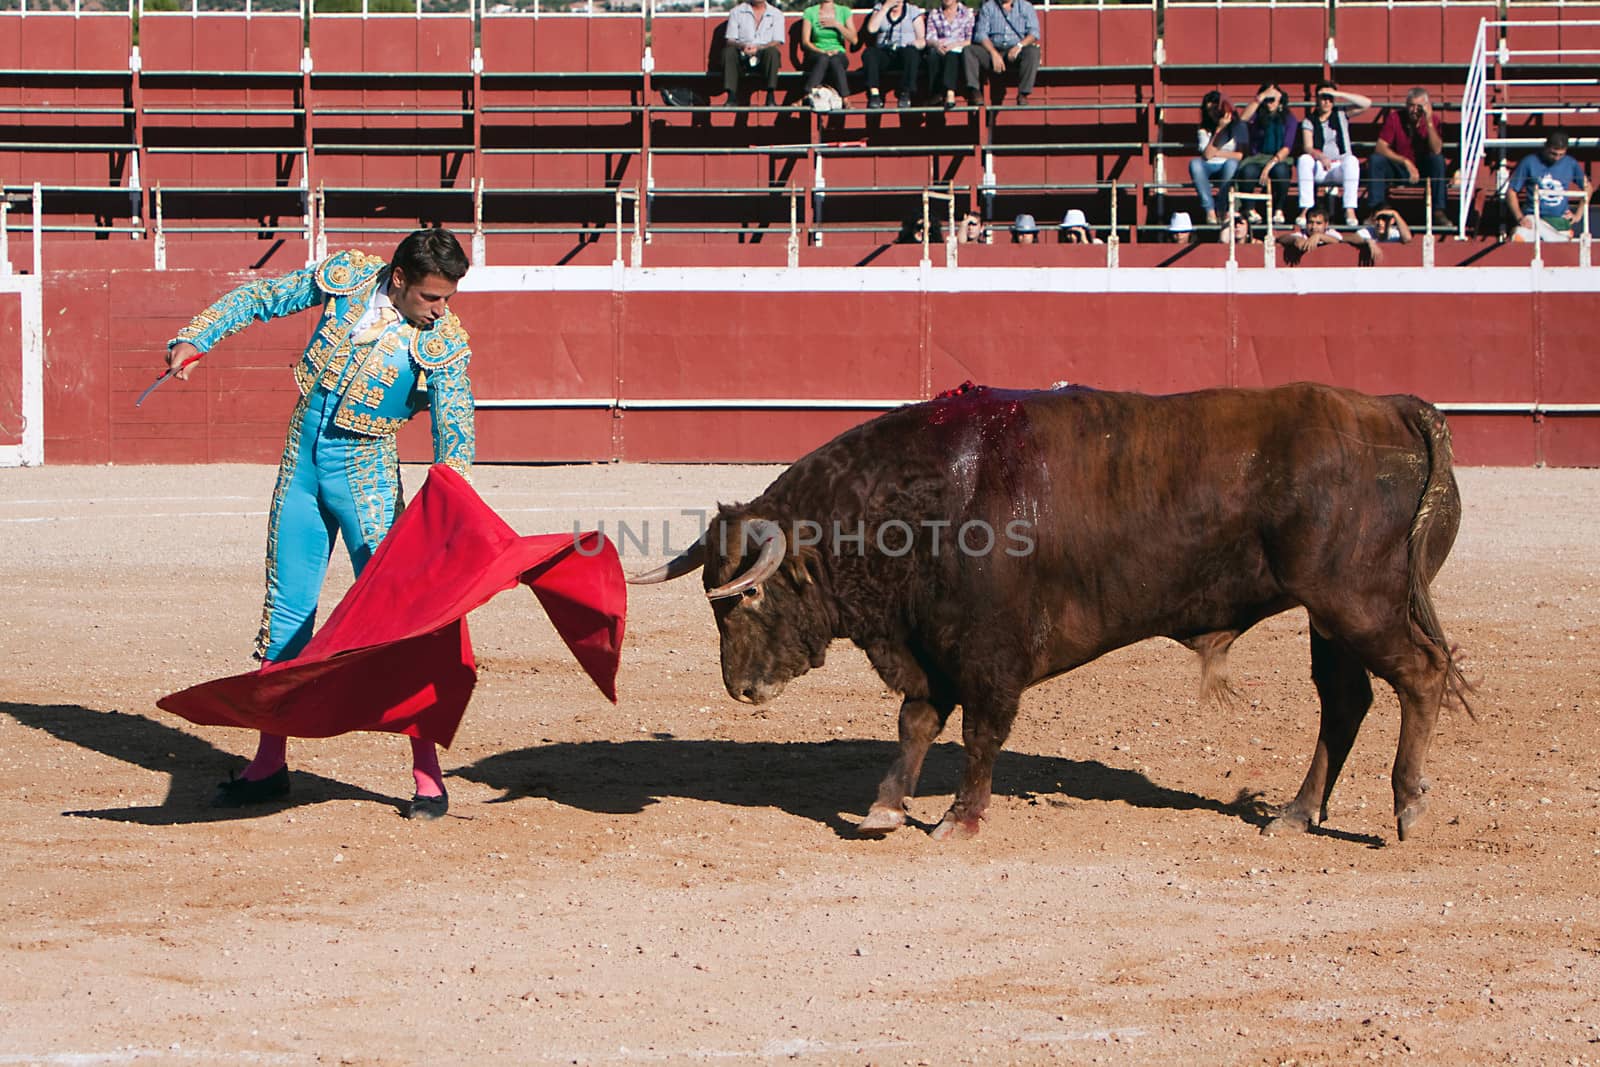 The Spanish bullfighter David Valiente Bullfight at Beas de Segura bullring, Jaen province, Andalusia,  Spain, 11 october 2010